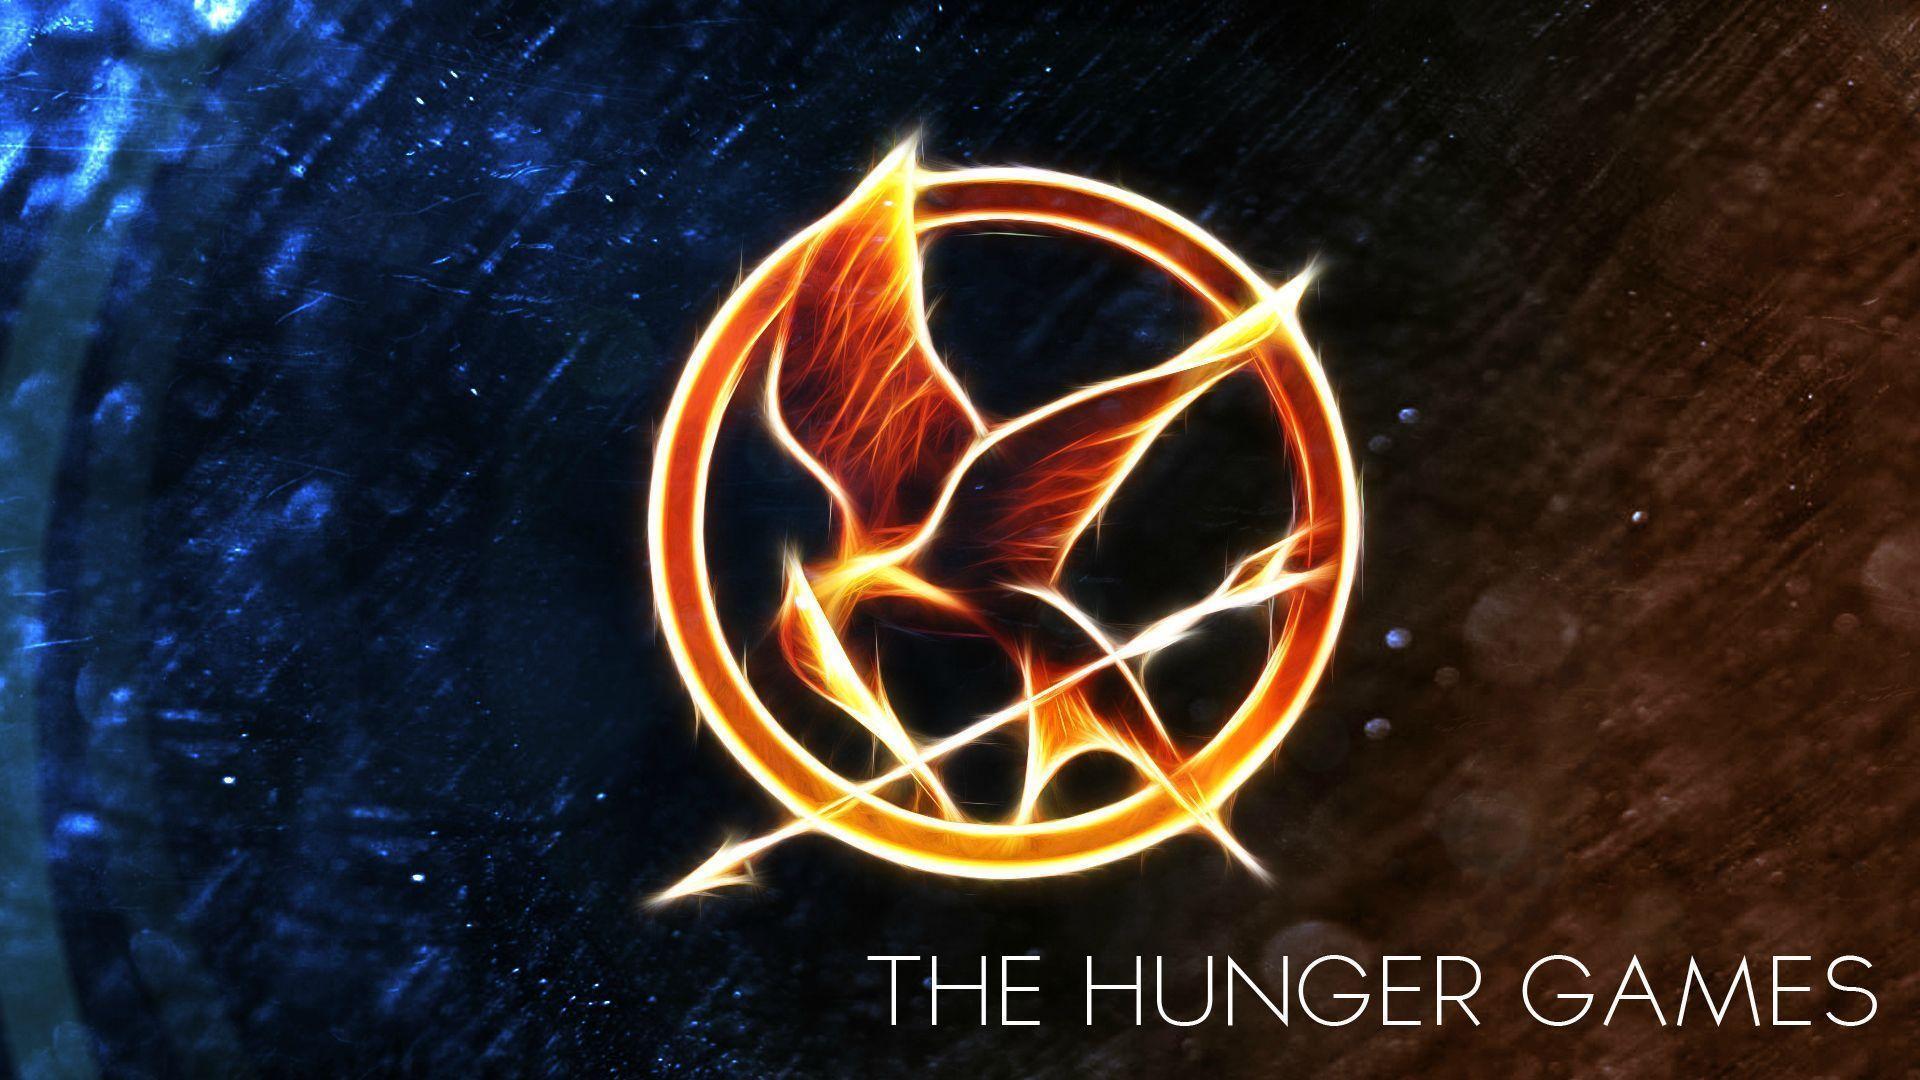 Hunger Games Wallpaper, Only HD Wide Wallpaper